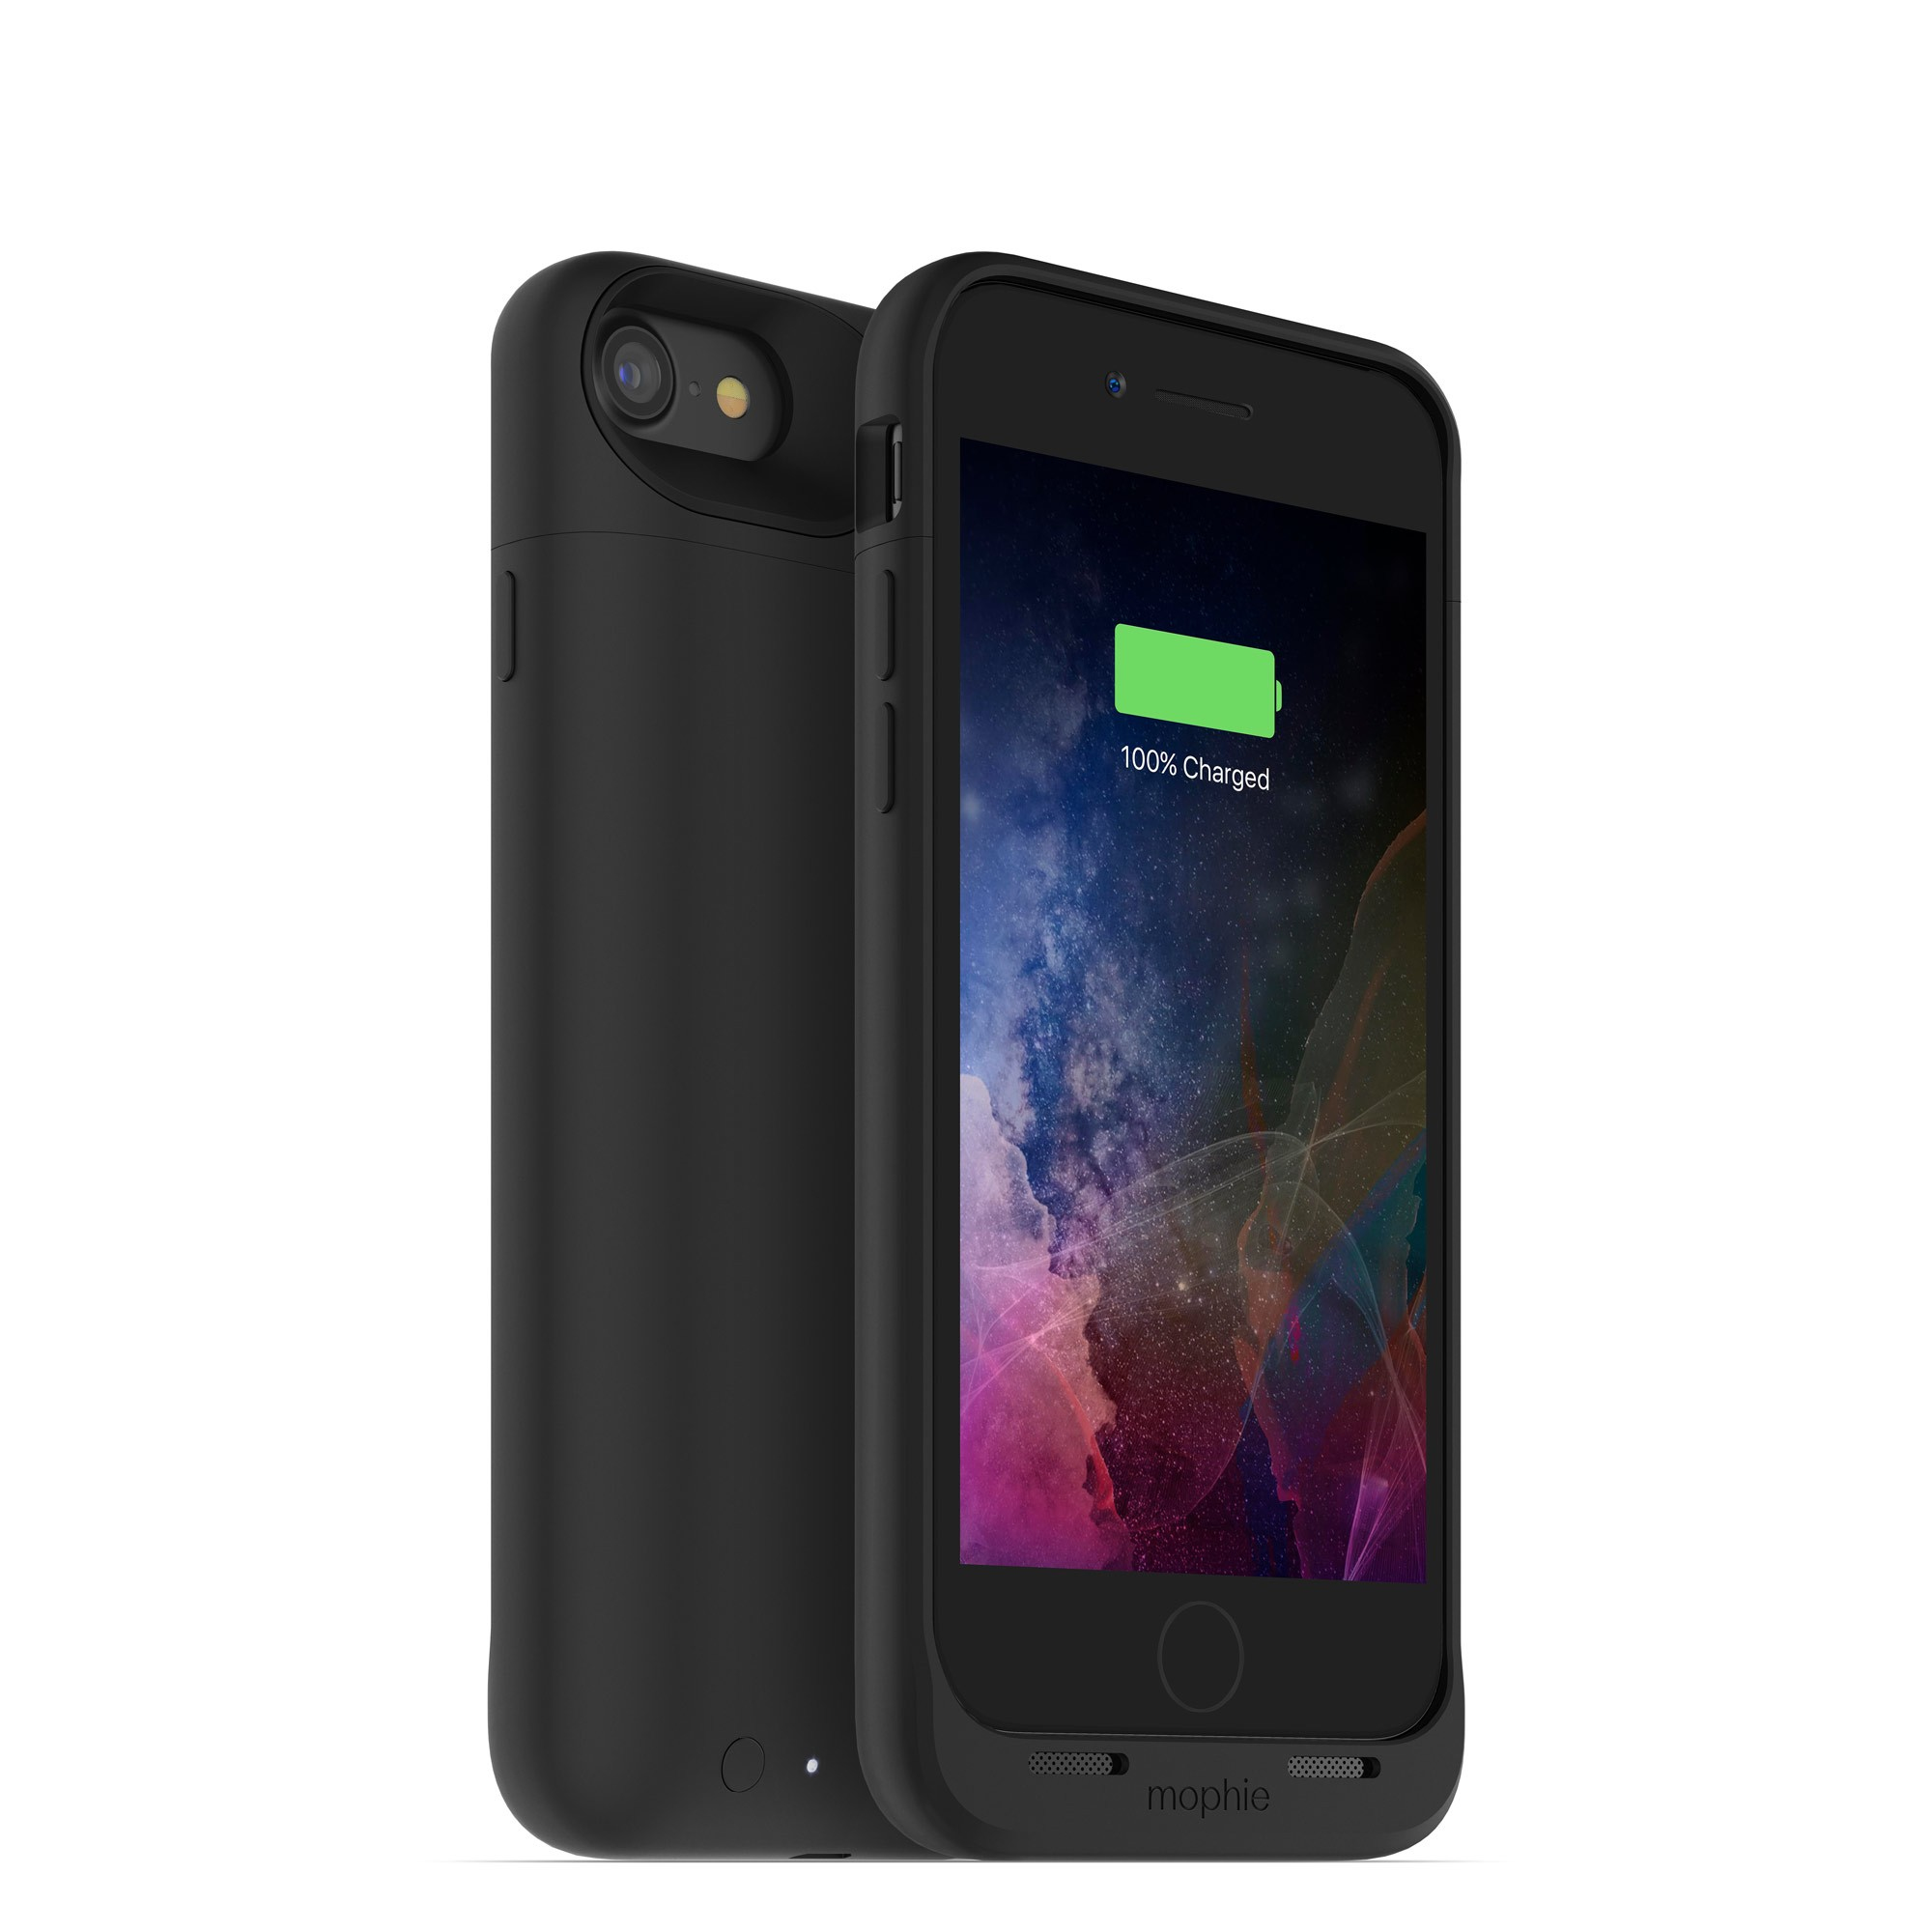 Mophie Juice Pack Air 2750mAh Battery Case Black iPhone 8/7